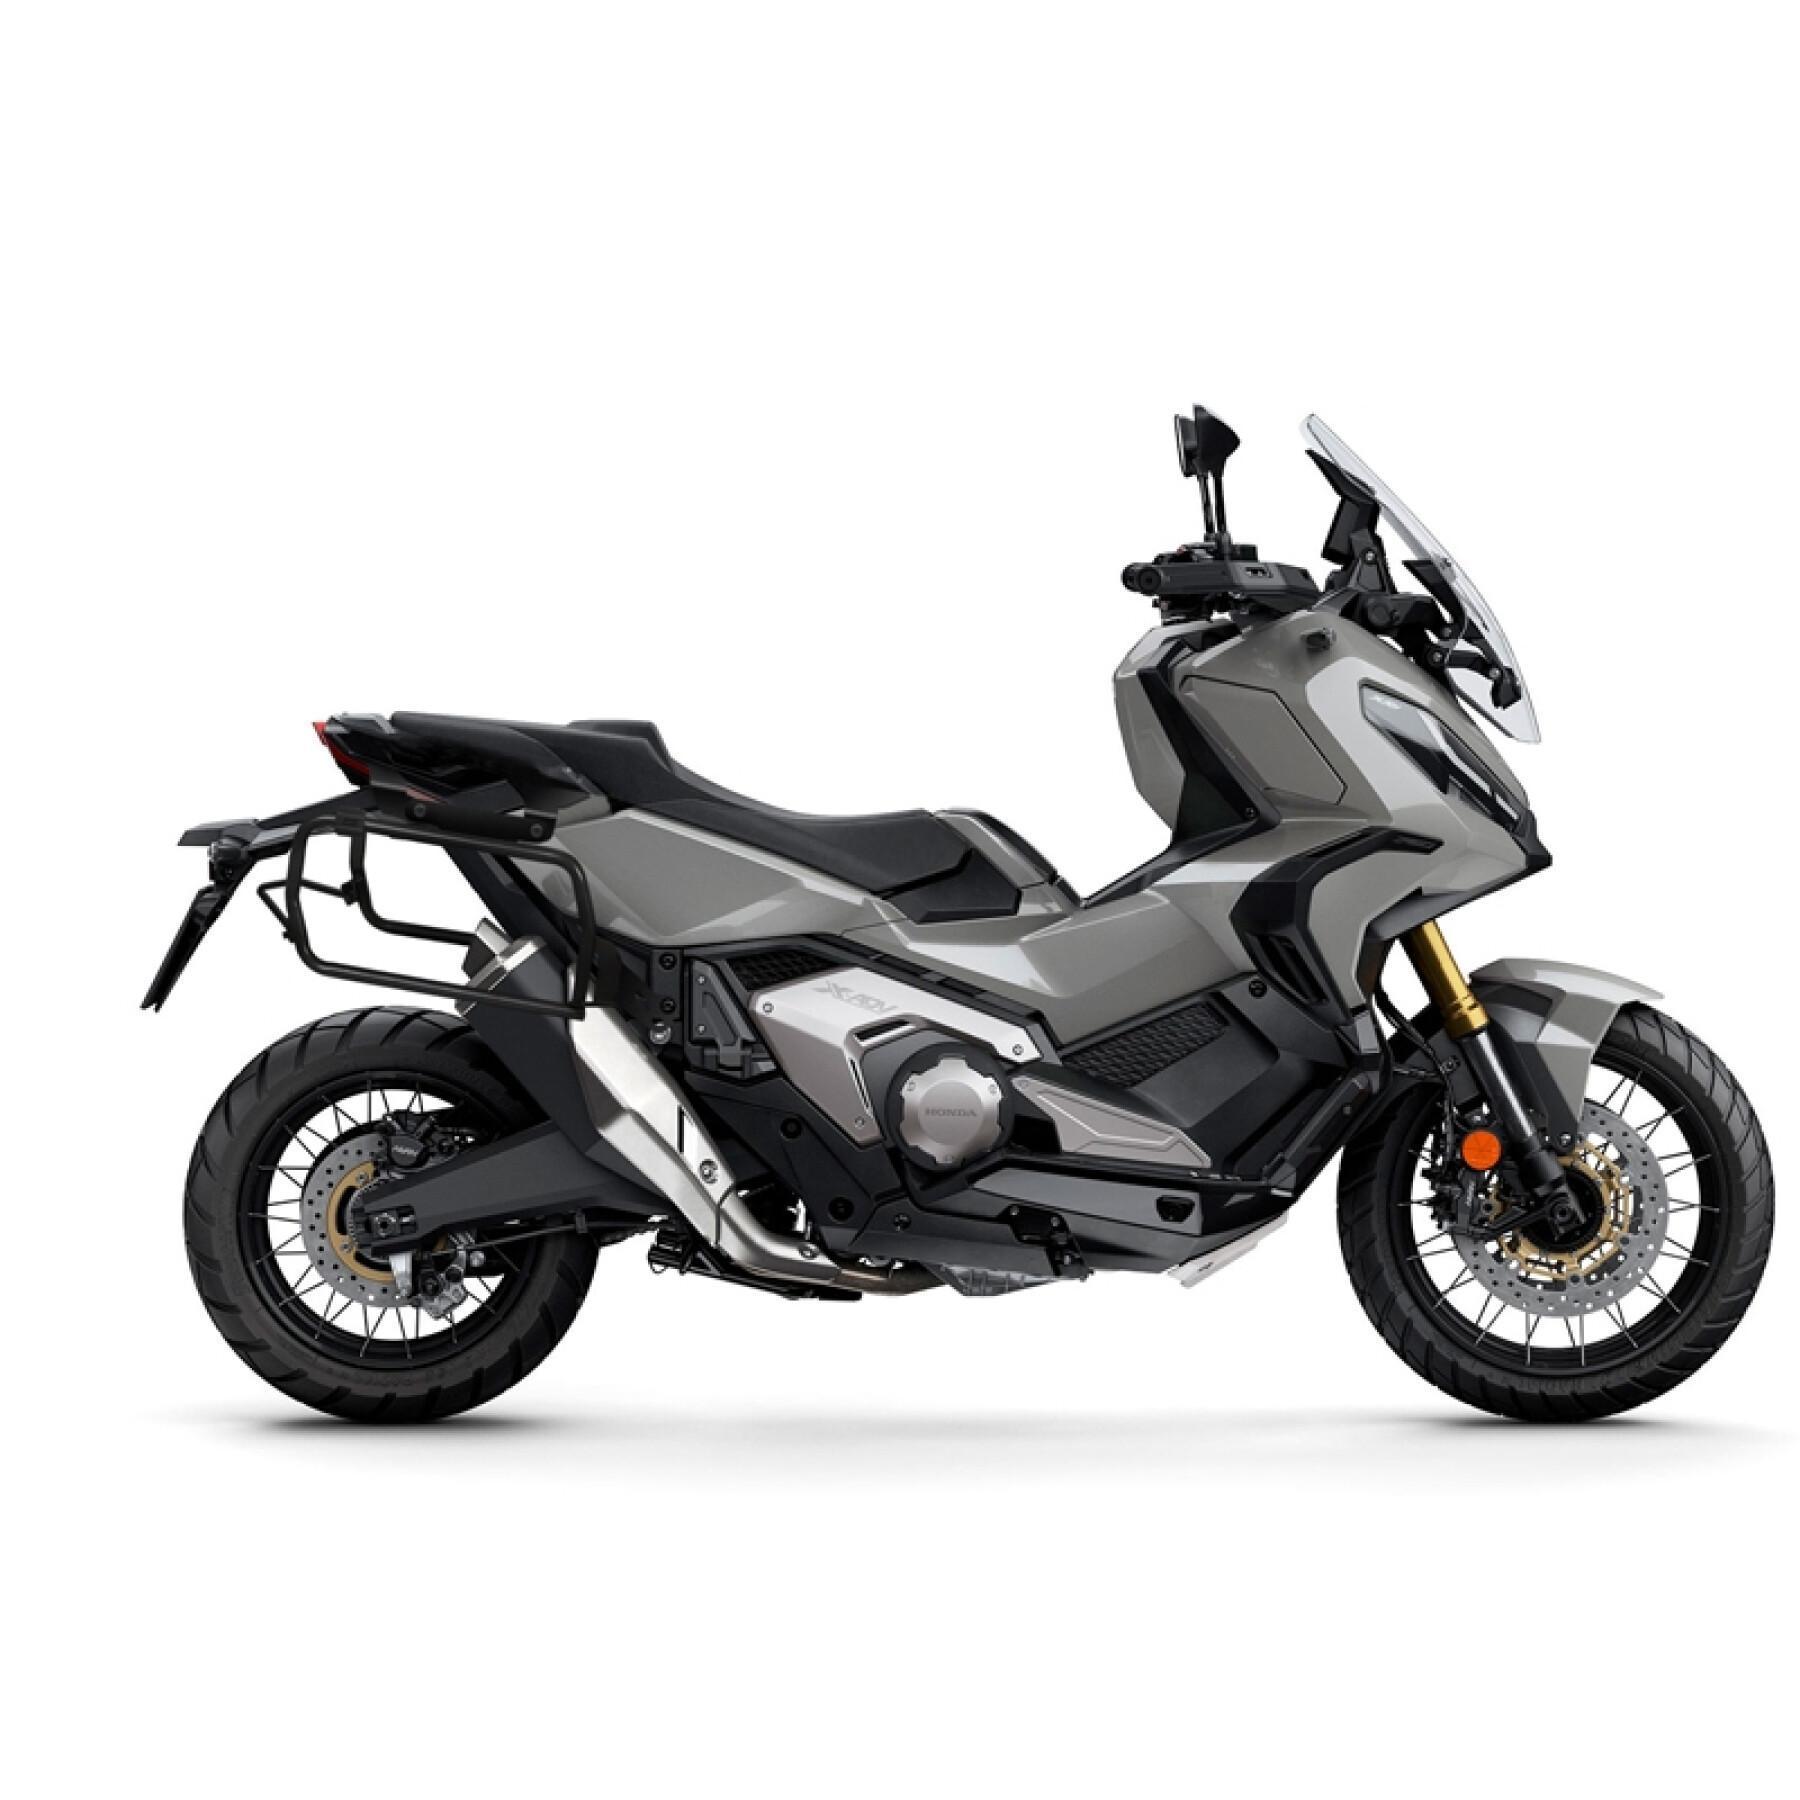 Soporte maleta lateral moto Shad 4P System Honda X-Adv 750 2021-2020